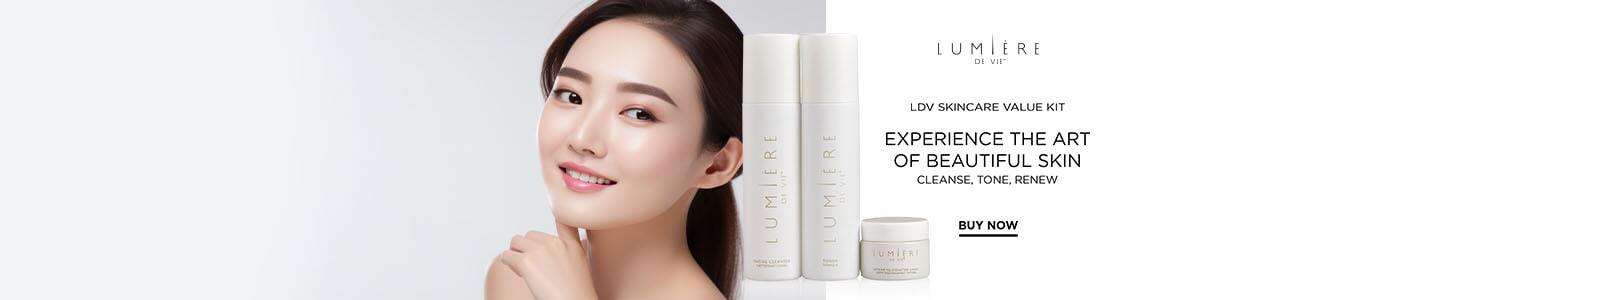 Experience the Art of Beautiful Skin – Cleanse, Tone, Renew LDV Skincare Value Kit Buy Now